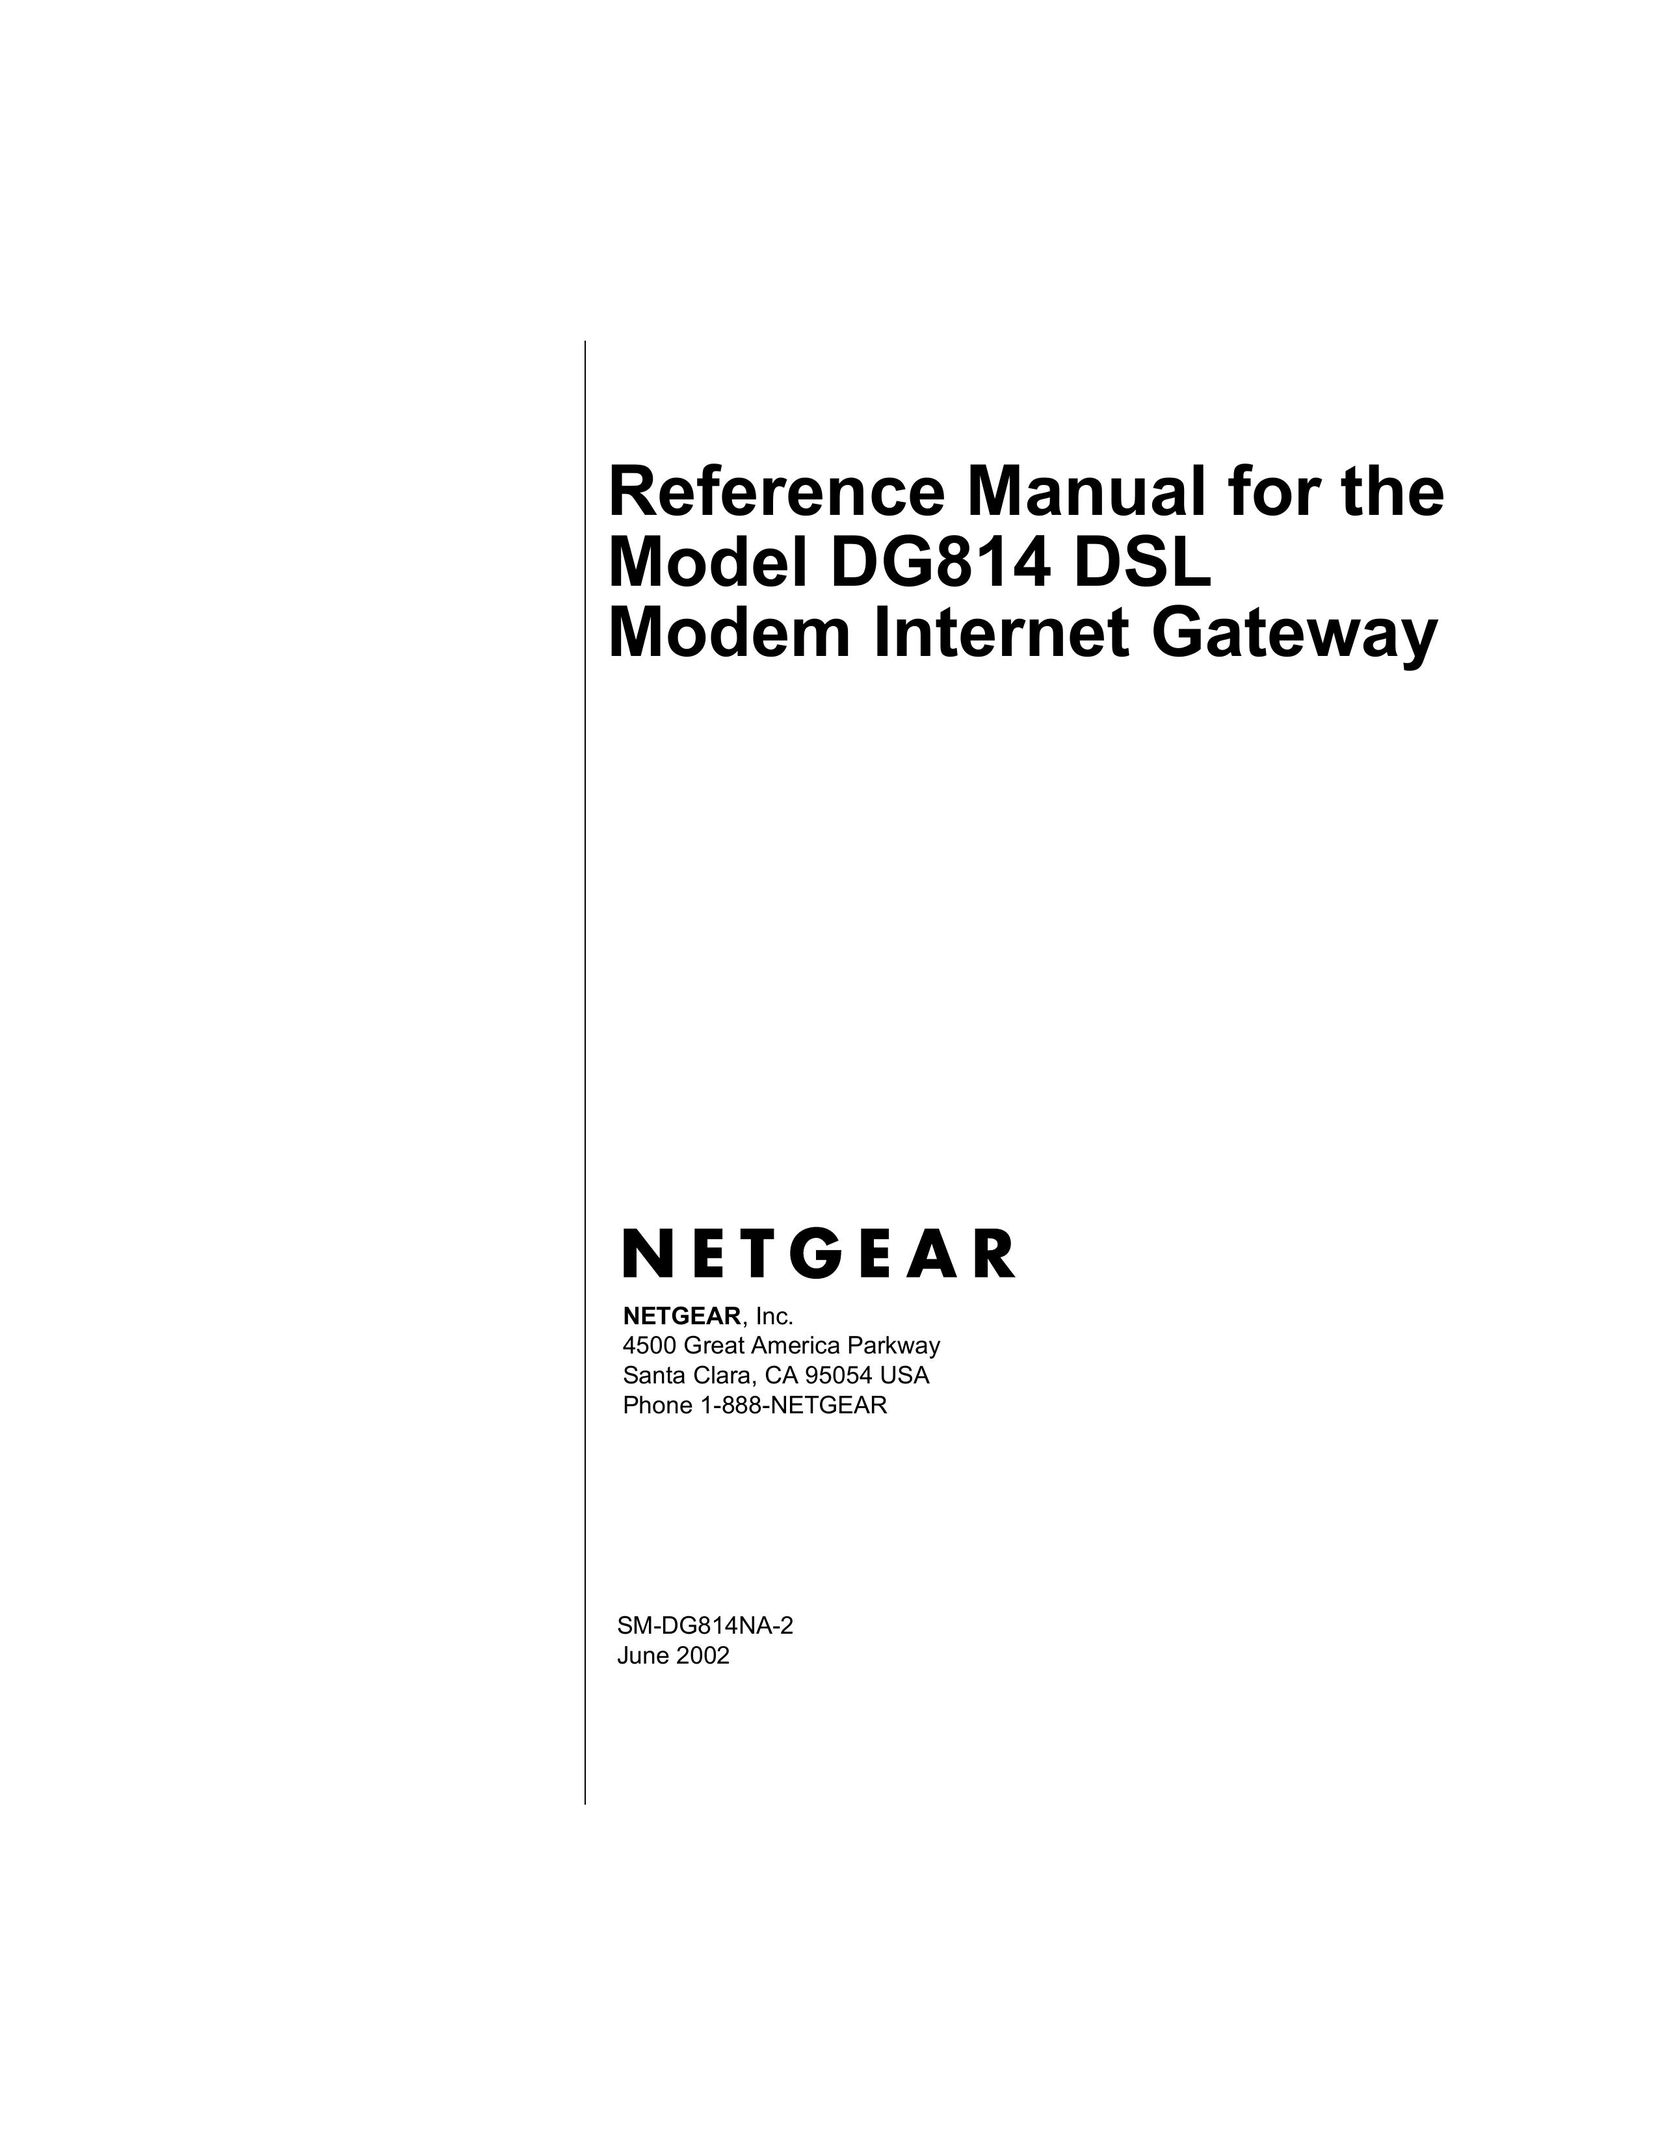 NETGEAR DG814 DSL Network Card User Manual